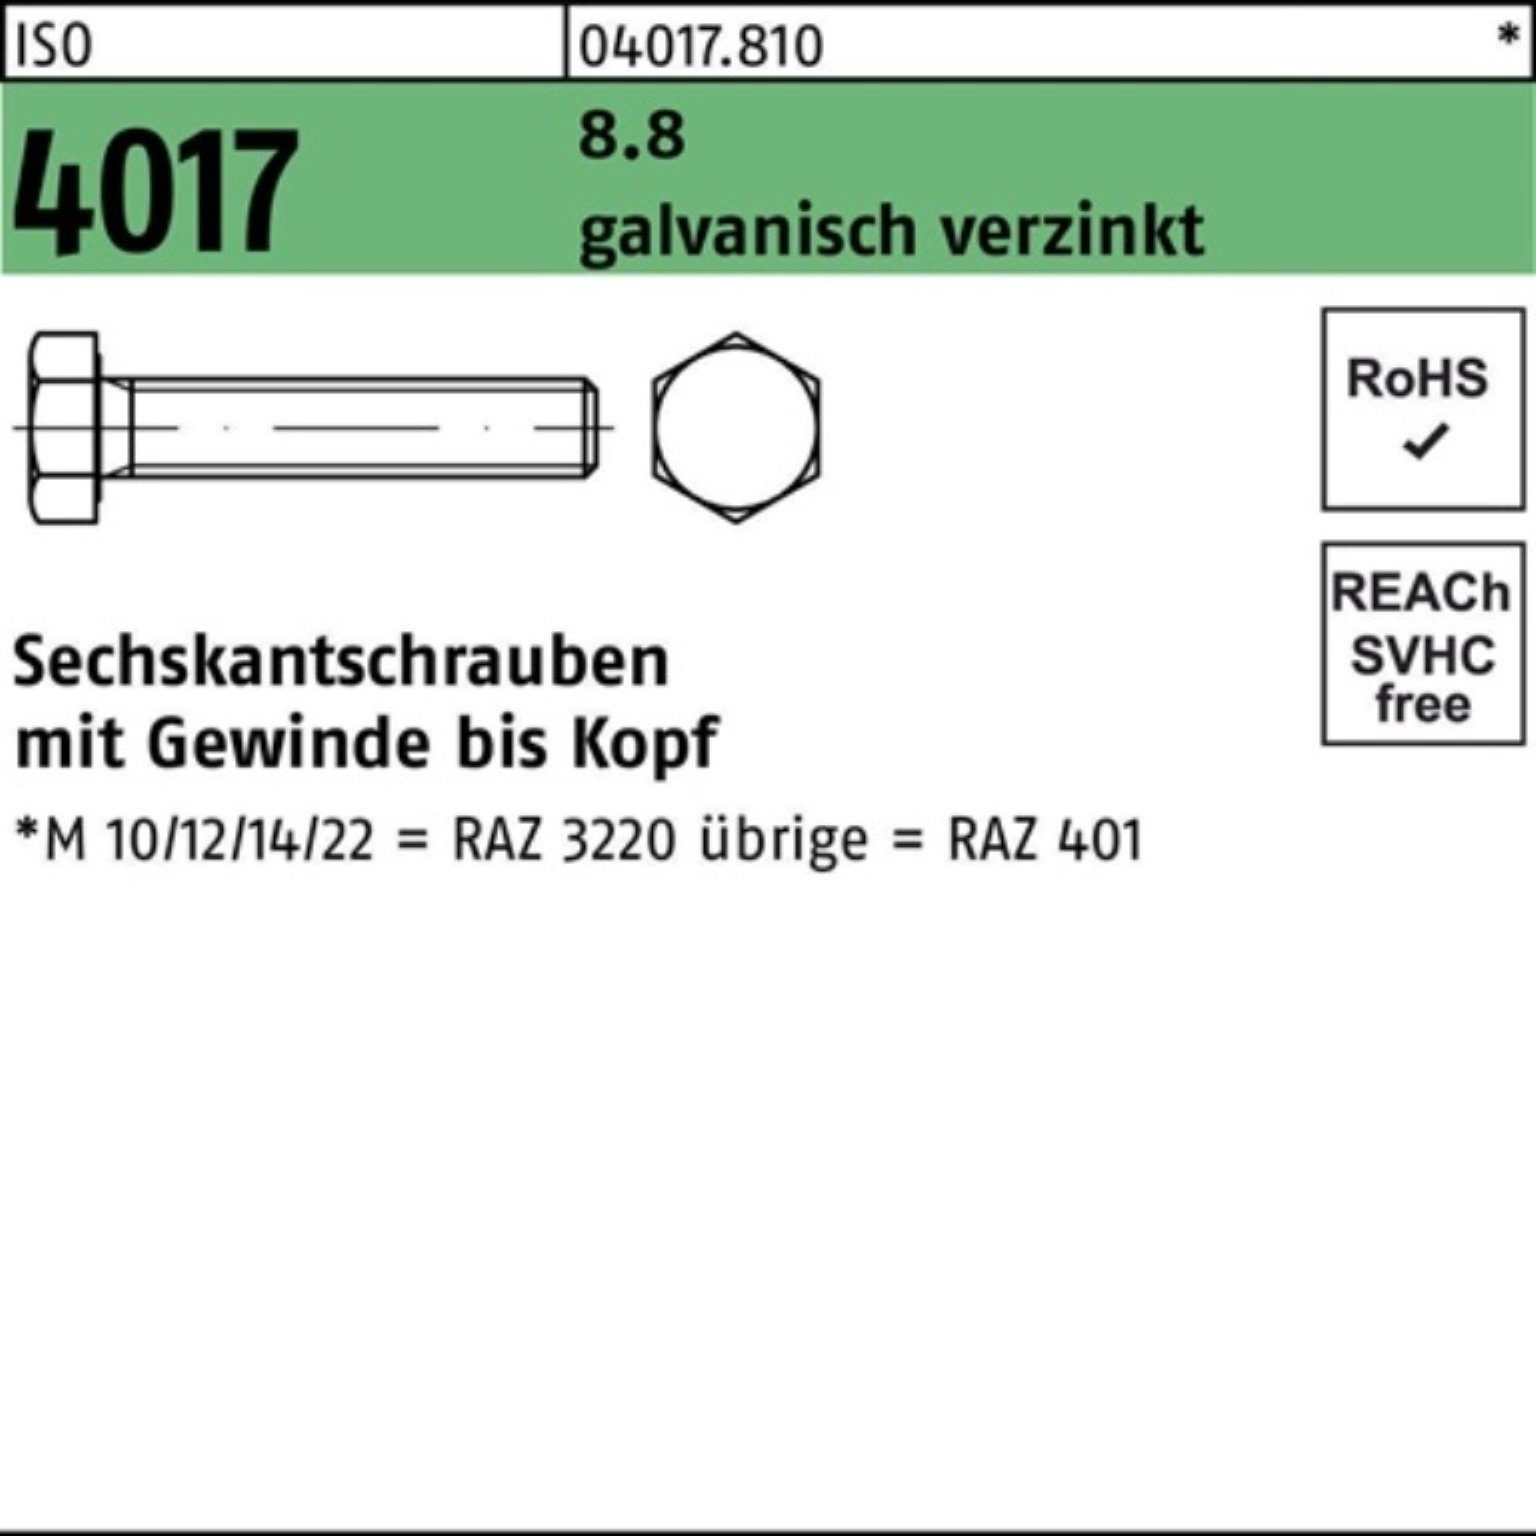 Bufab Sechskantschraube 100er ISO 4017 100 M6x 8.8 galv.verz. 140 St Sechskantschraube Pack VG